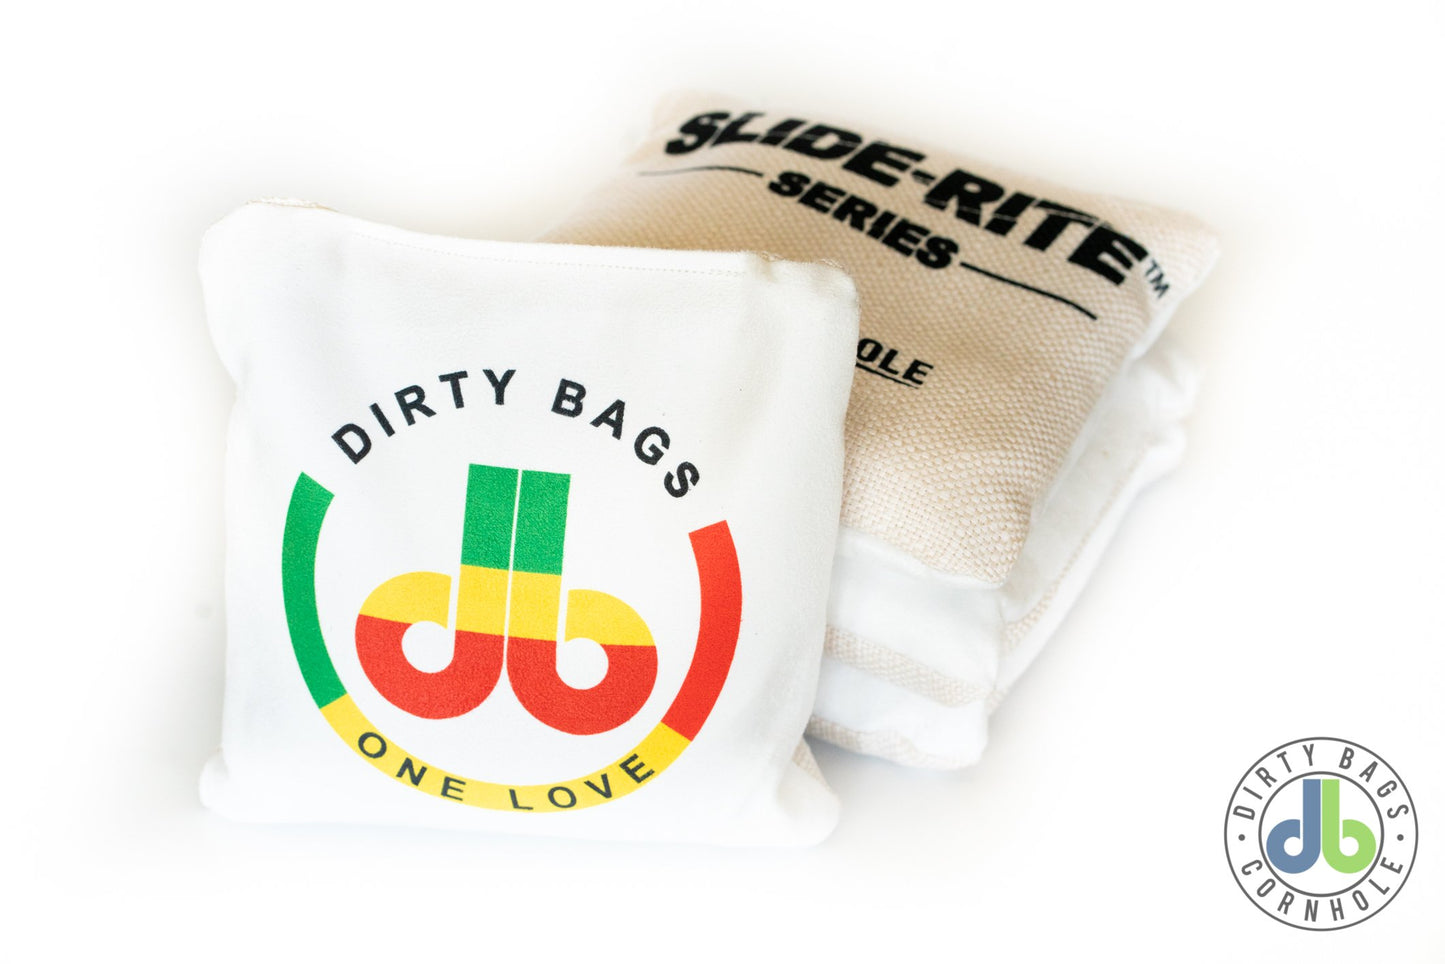 Slide Rites - DBC One Love Edition (Set of 4 Bags)